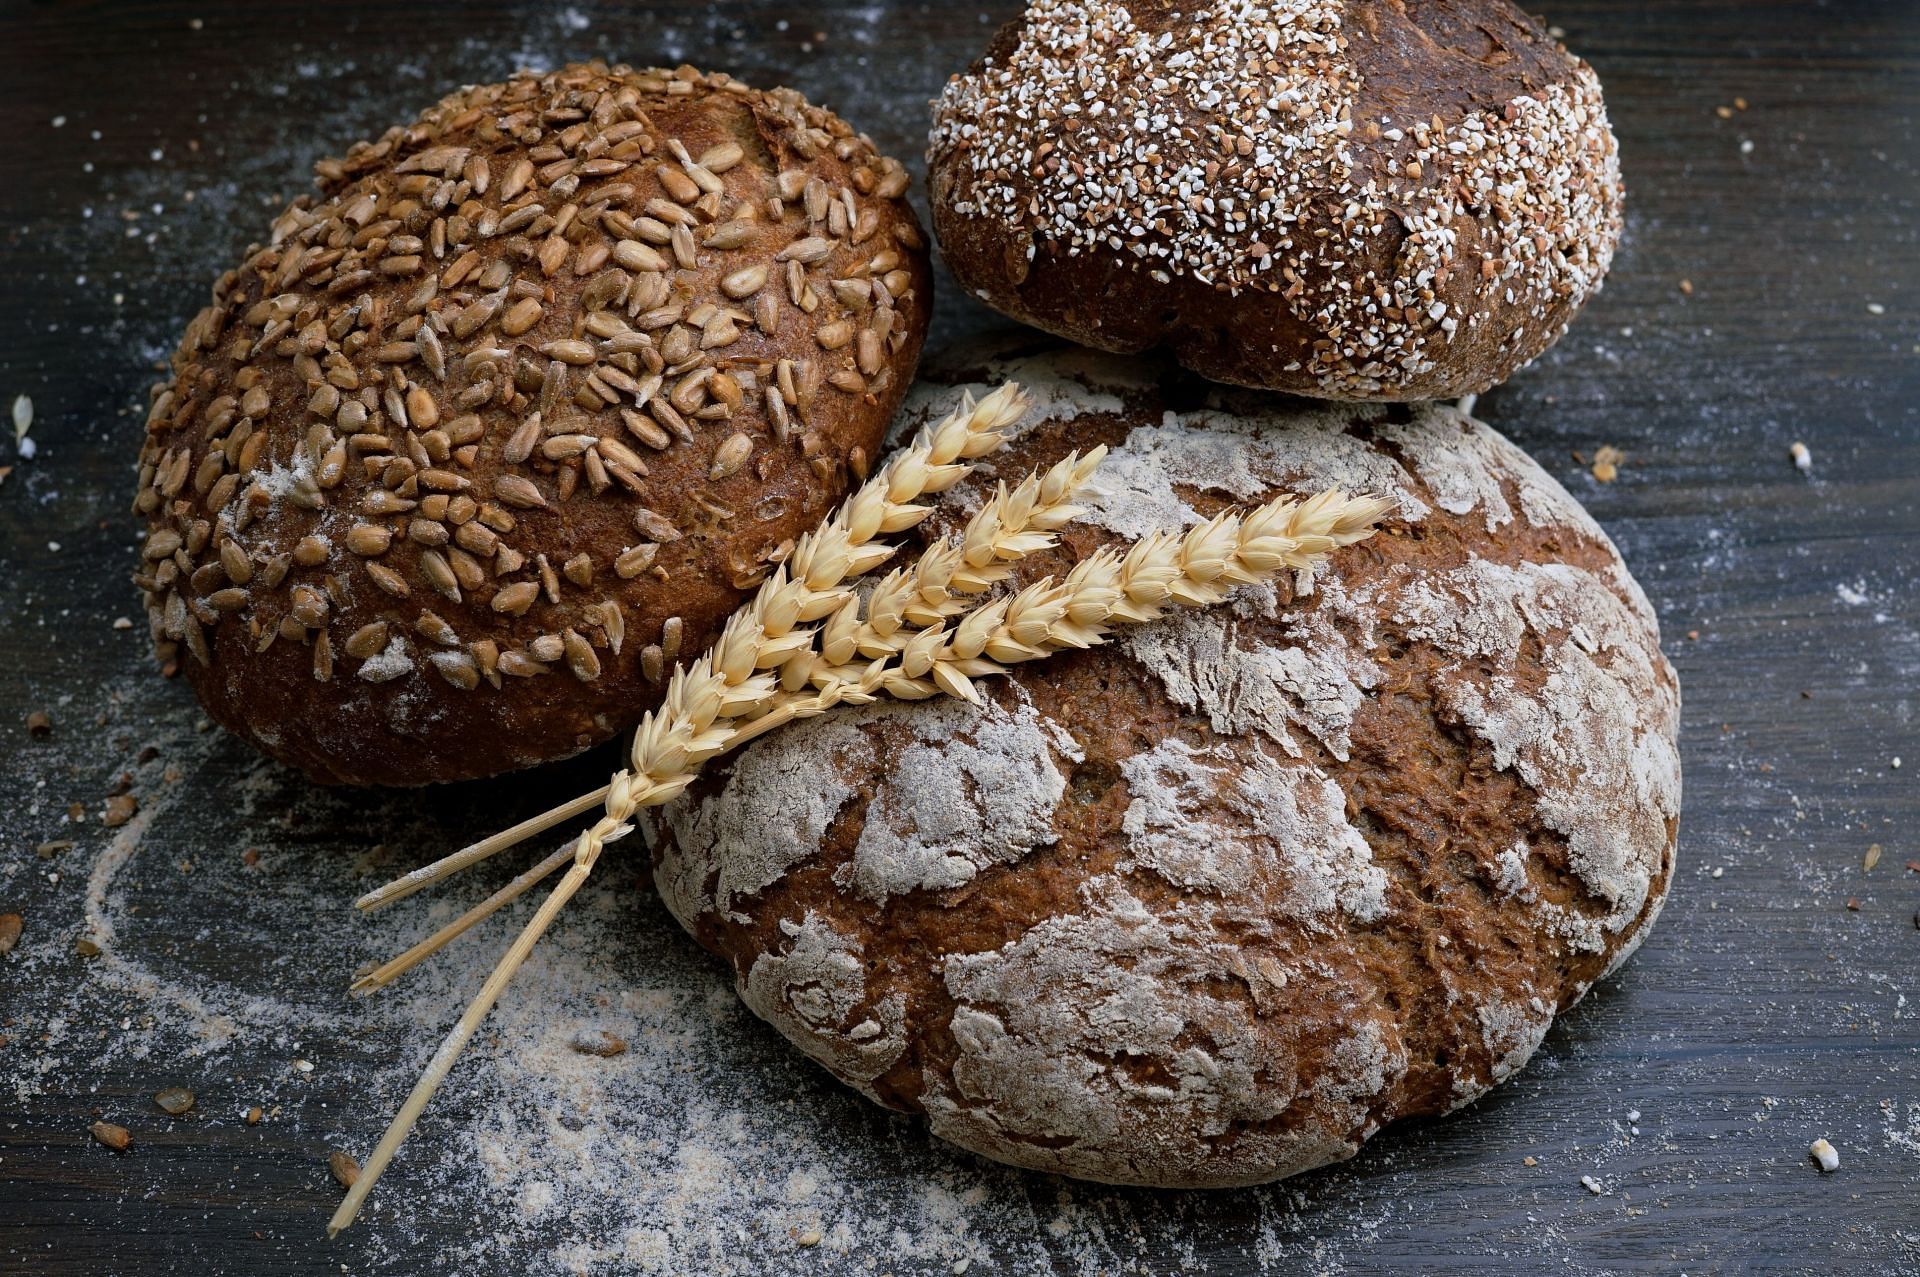 Pumpernickel bread is a healthier option than white bread (Image via Unsplash/Wesual Click)